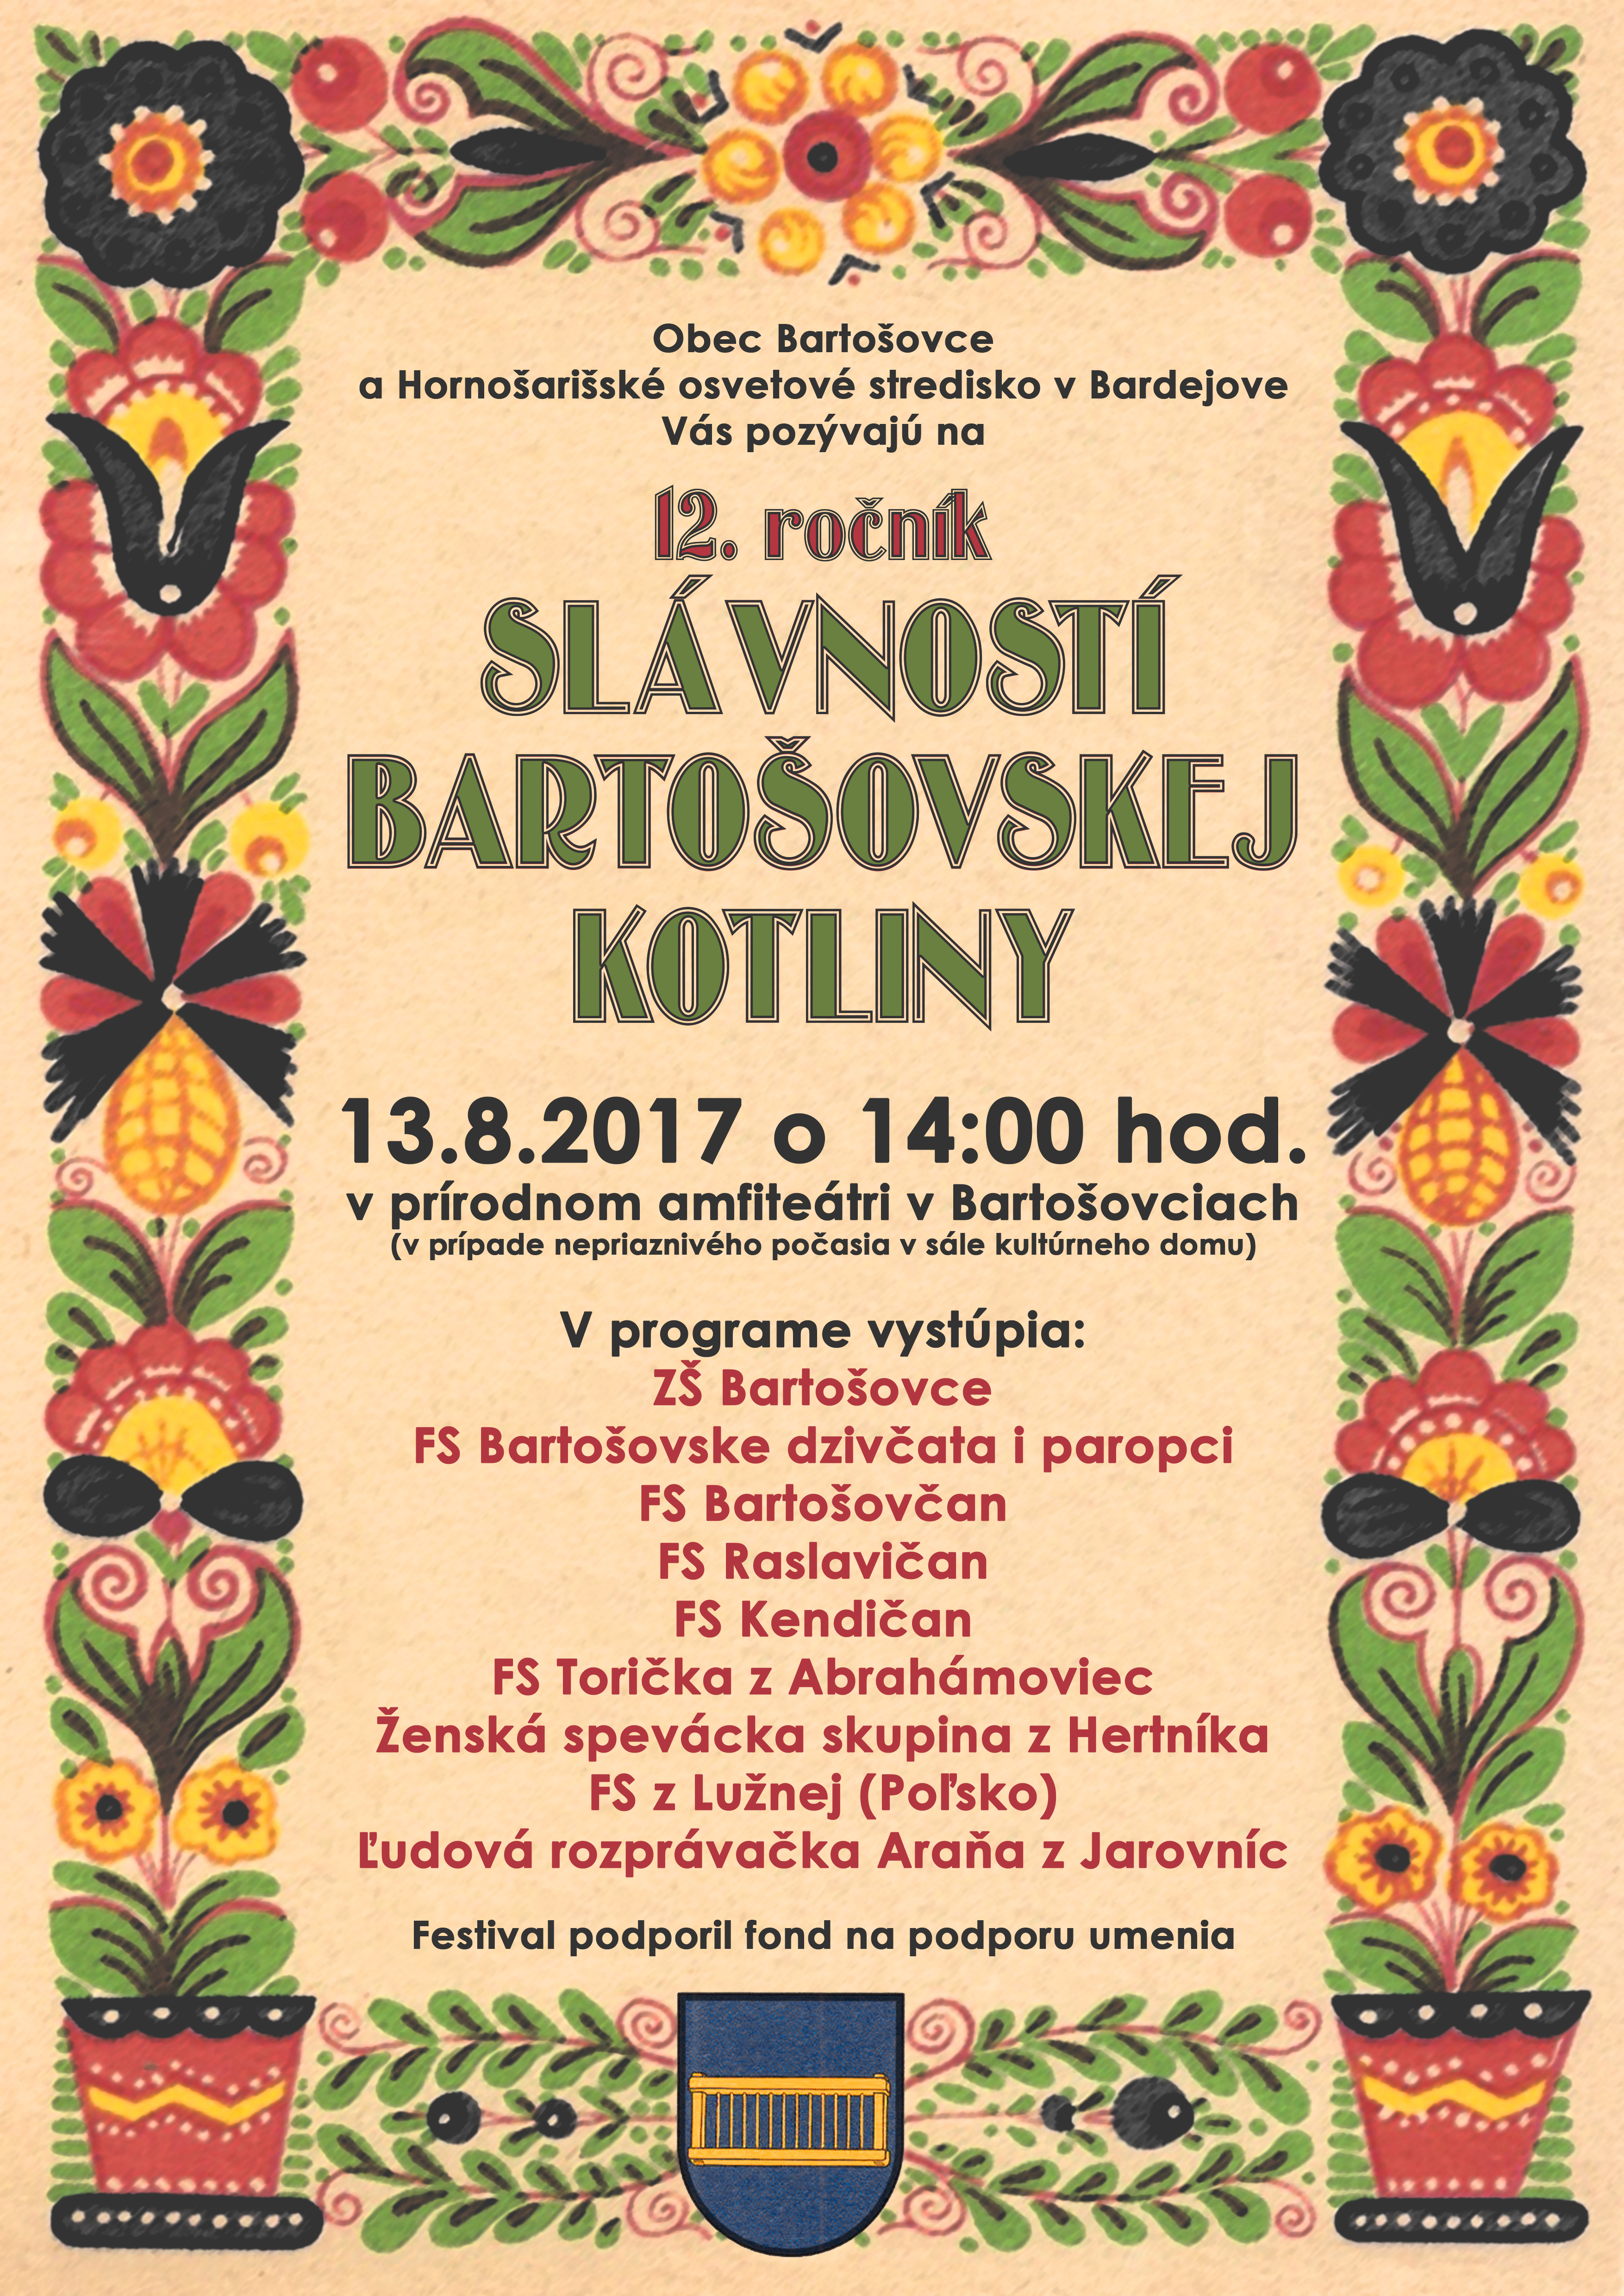 Slvnosti Bartoovskej kotliny 2017 -12. ronk